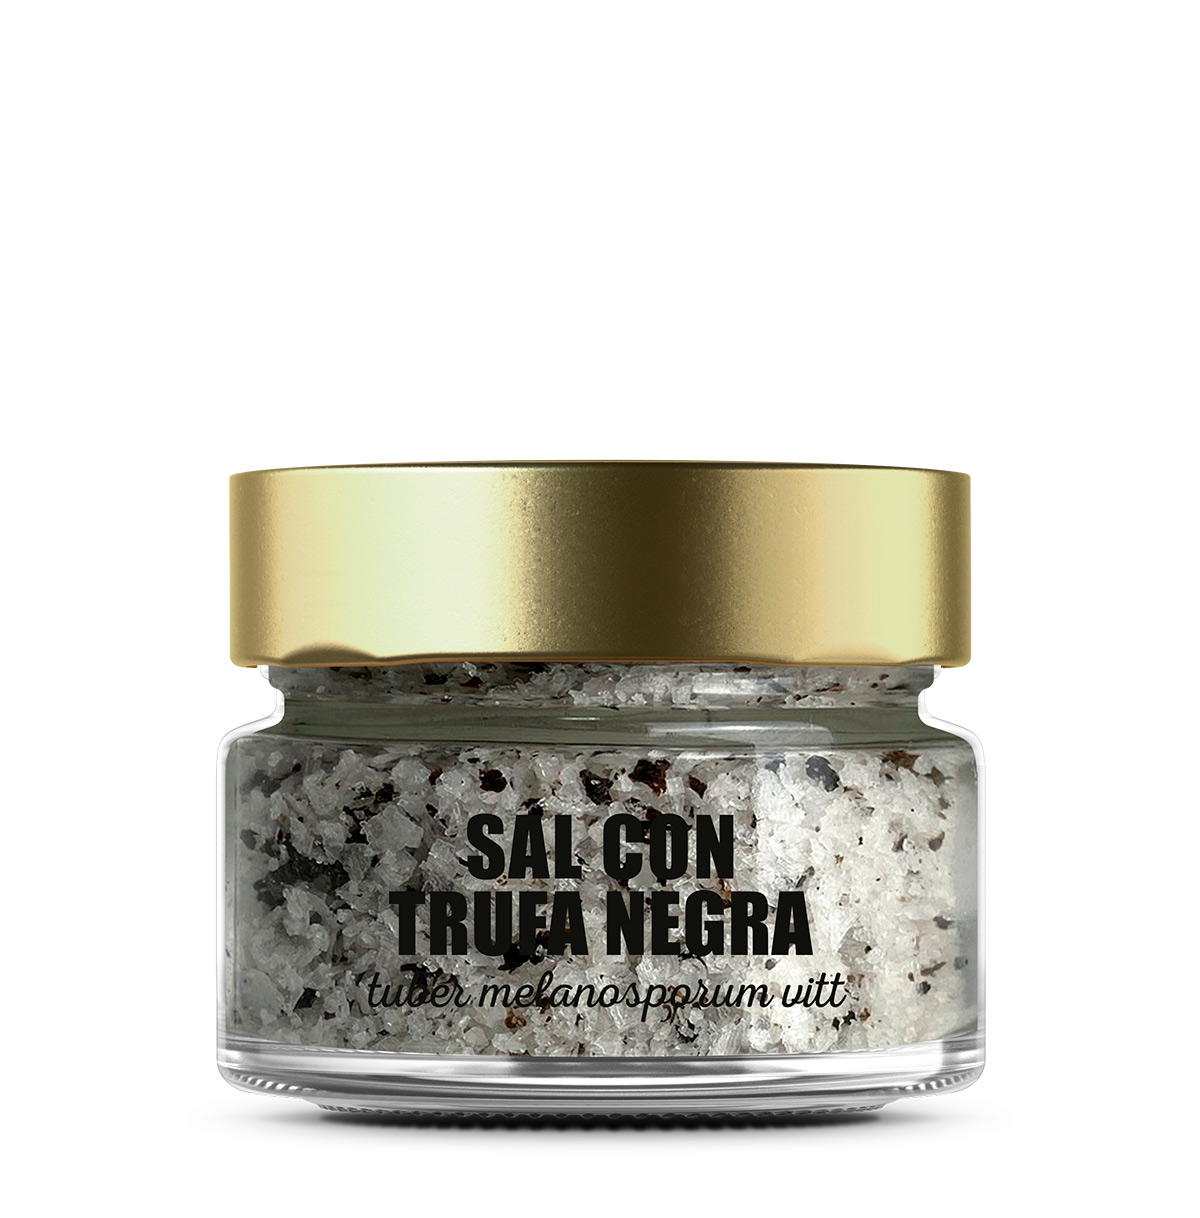 Salz mit schwarzer trüffel tuber melanosporum vitt